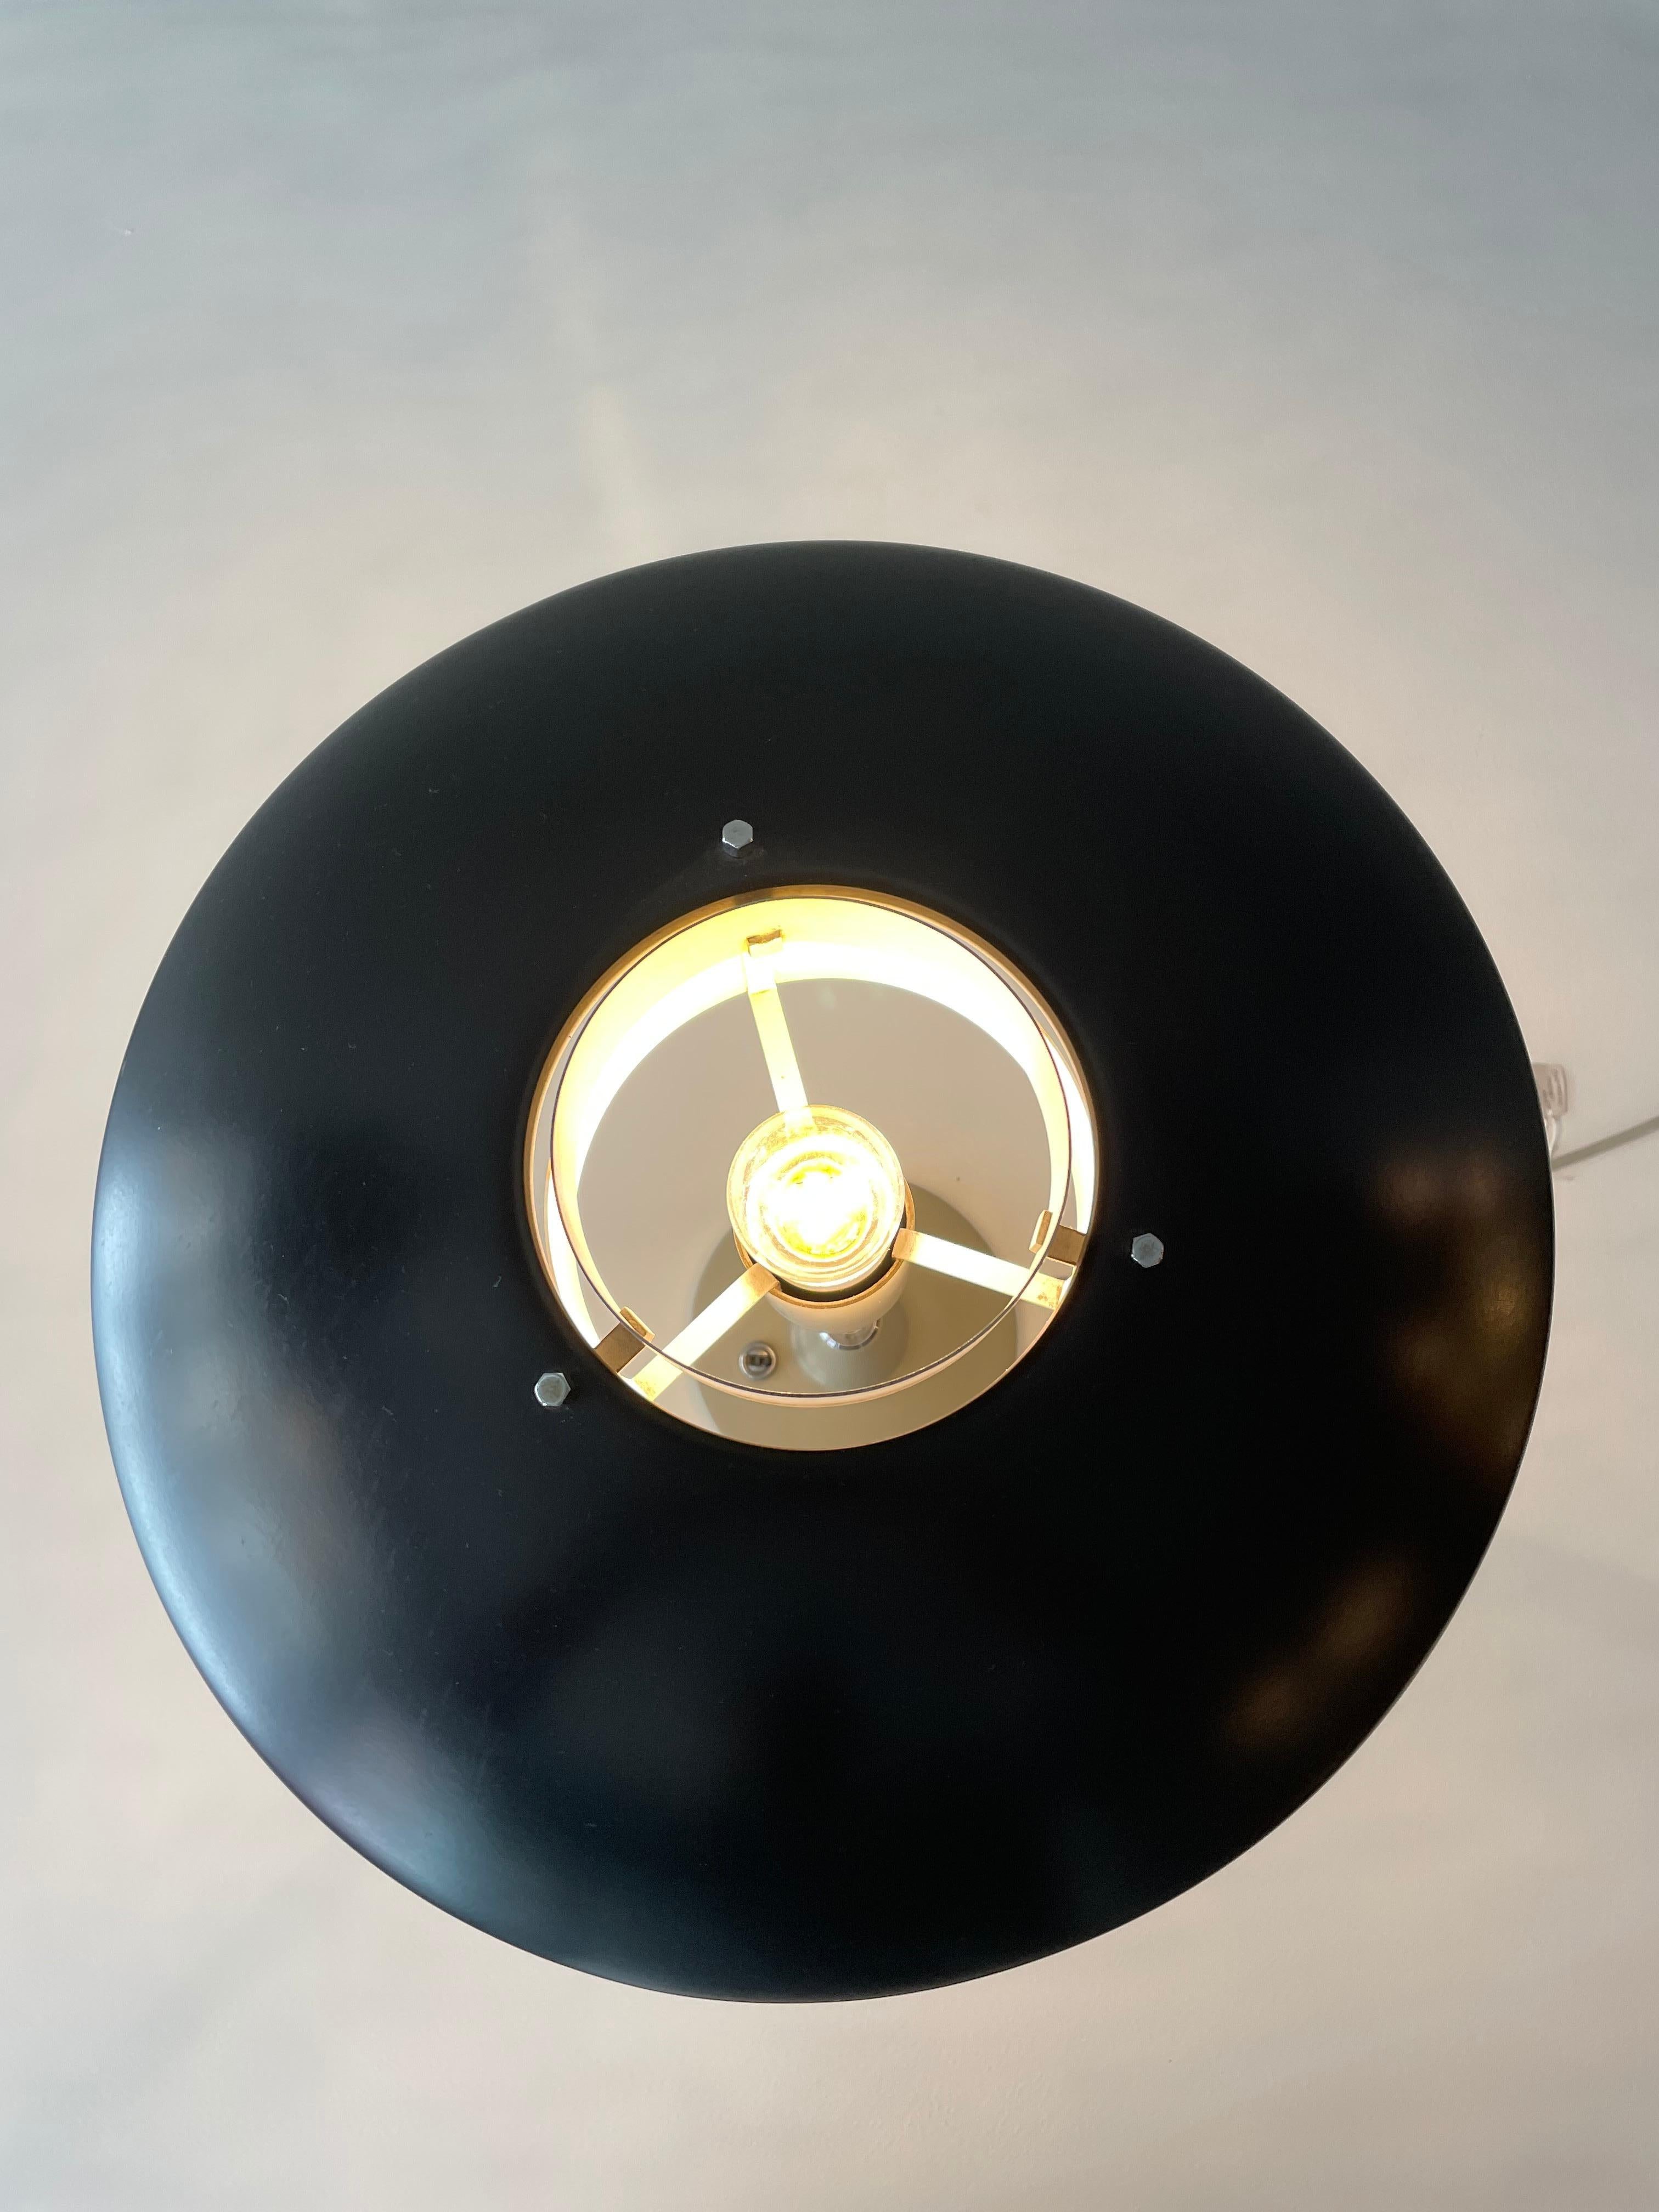 Mod. 8022 table lamp manufactured by Stilnovo, Italy, 1960s.
Grey, white and black lacquered aluminium.
It's in original conditions.
Original manufacturer label.

References: “Stilnovo, apparecchi per l’illuminazione” luminaires - moderniste p.